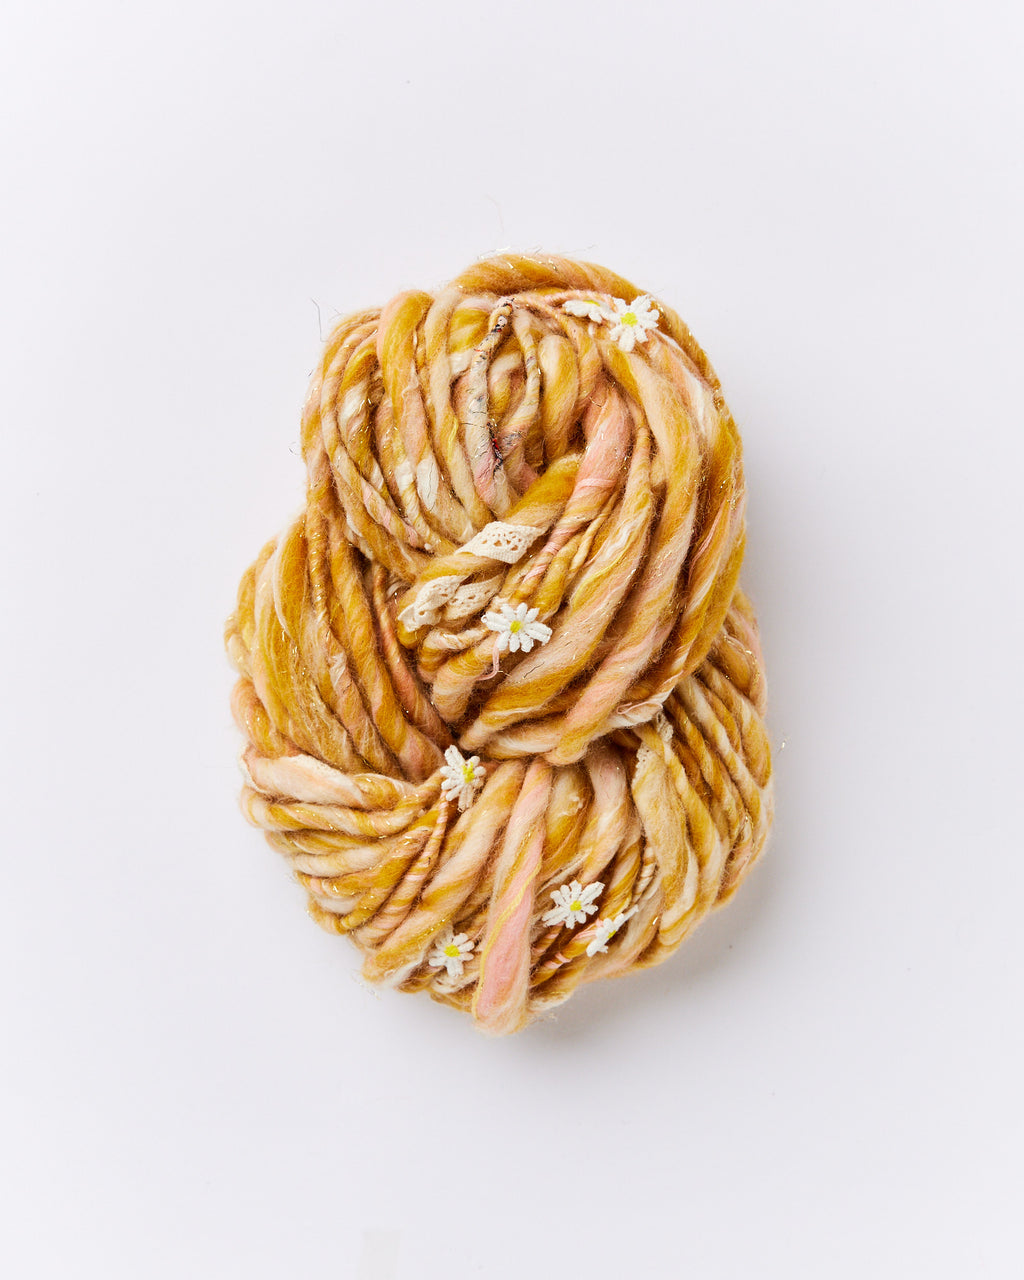 Daisy Chain Yarn in Dune Twist by Knit Collage - Chunky bulky Hand knitting yarn